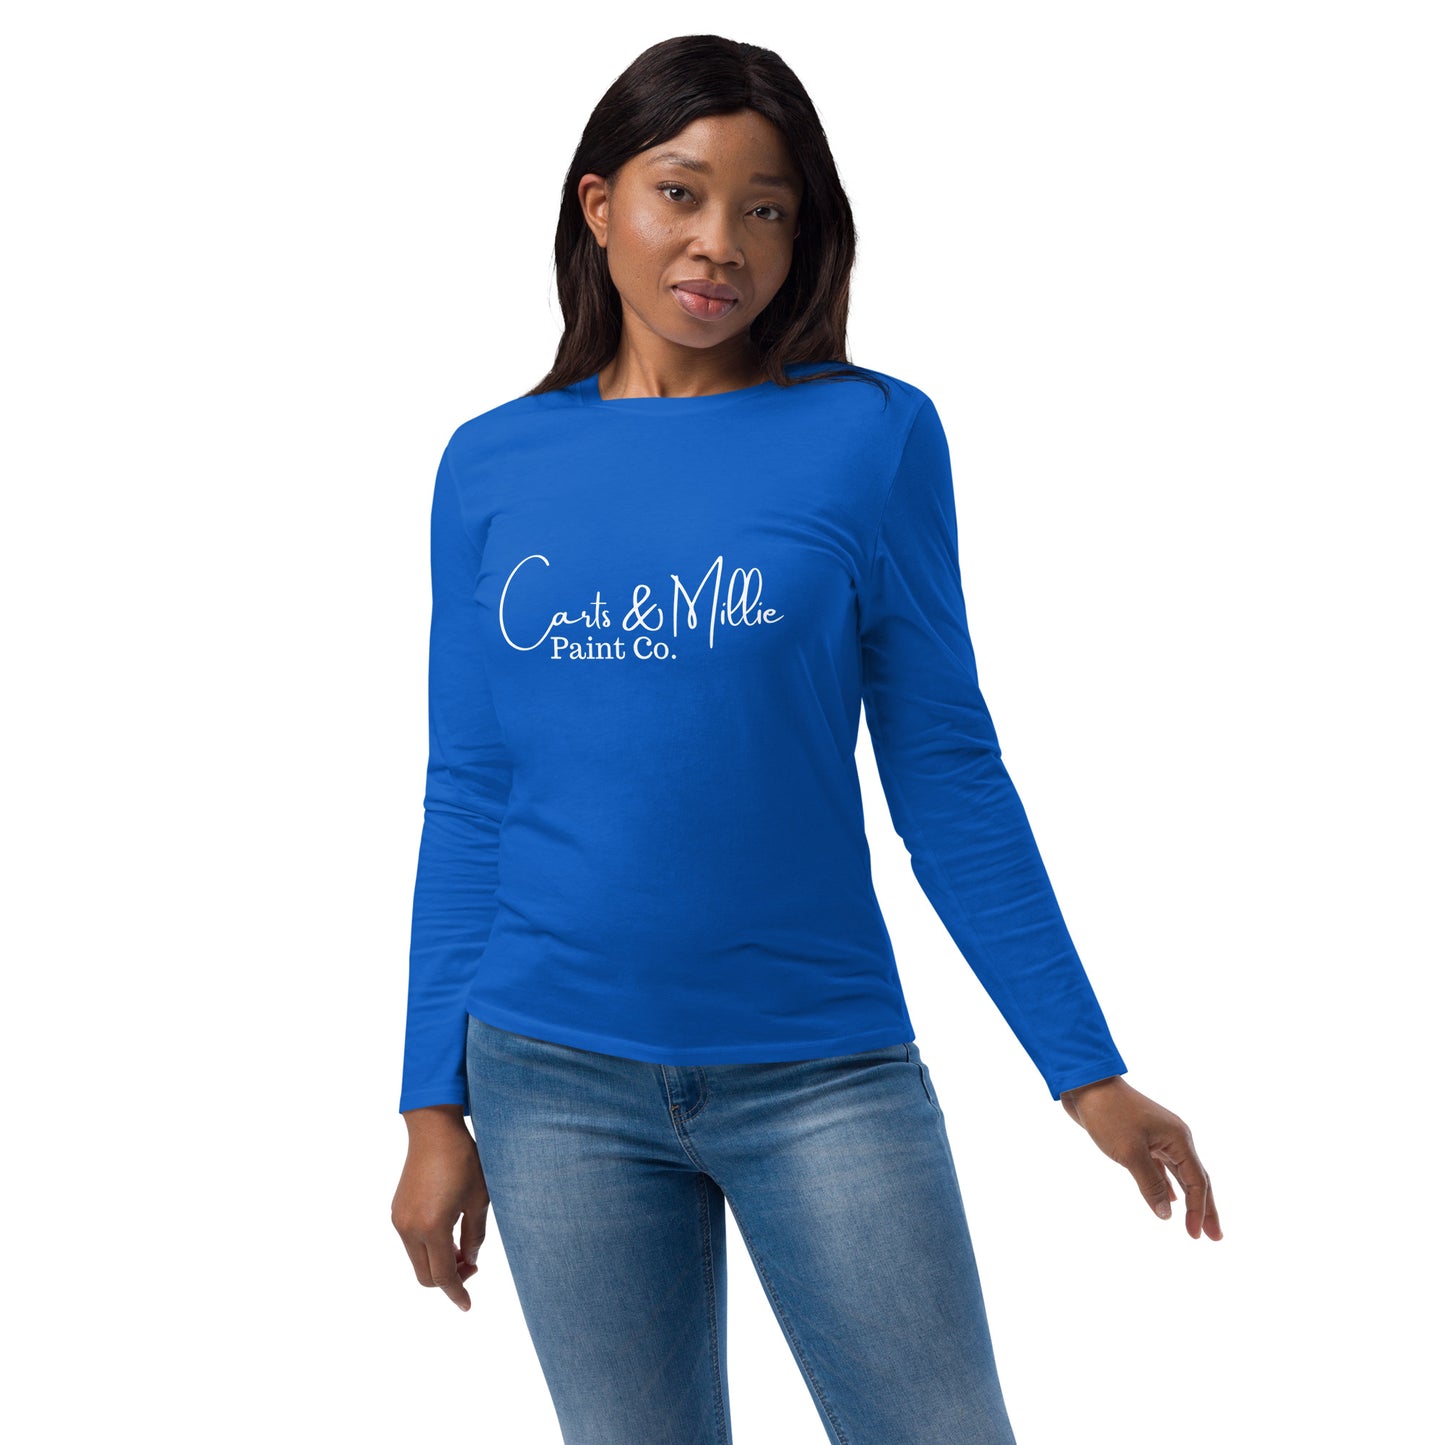 Carts & Millie Paint Co. Unisex fashion long sleeve shirt